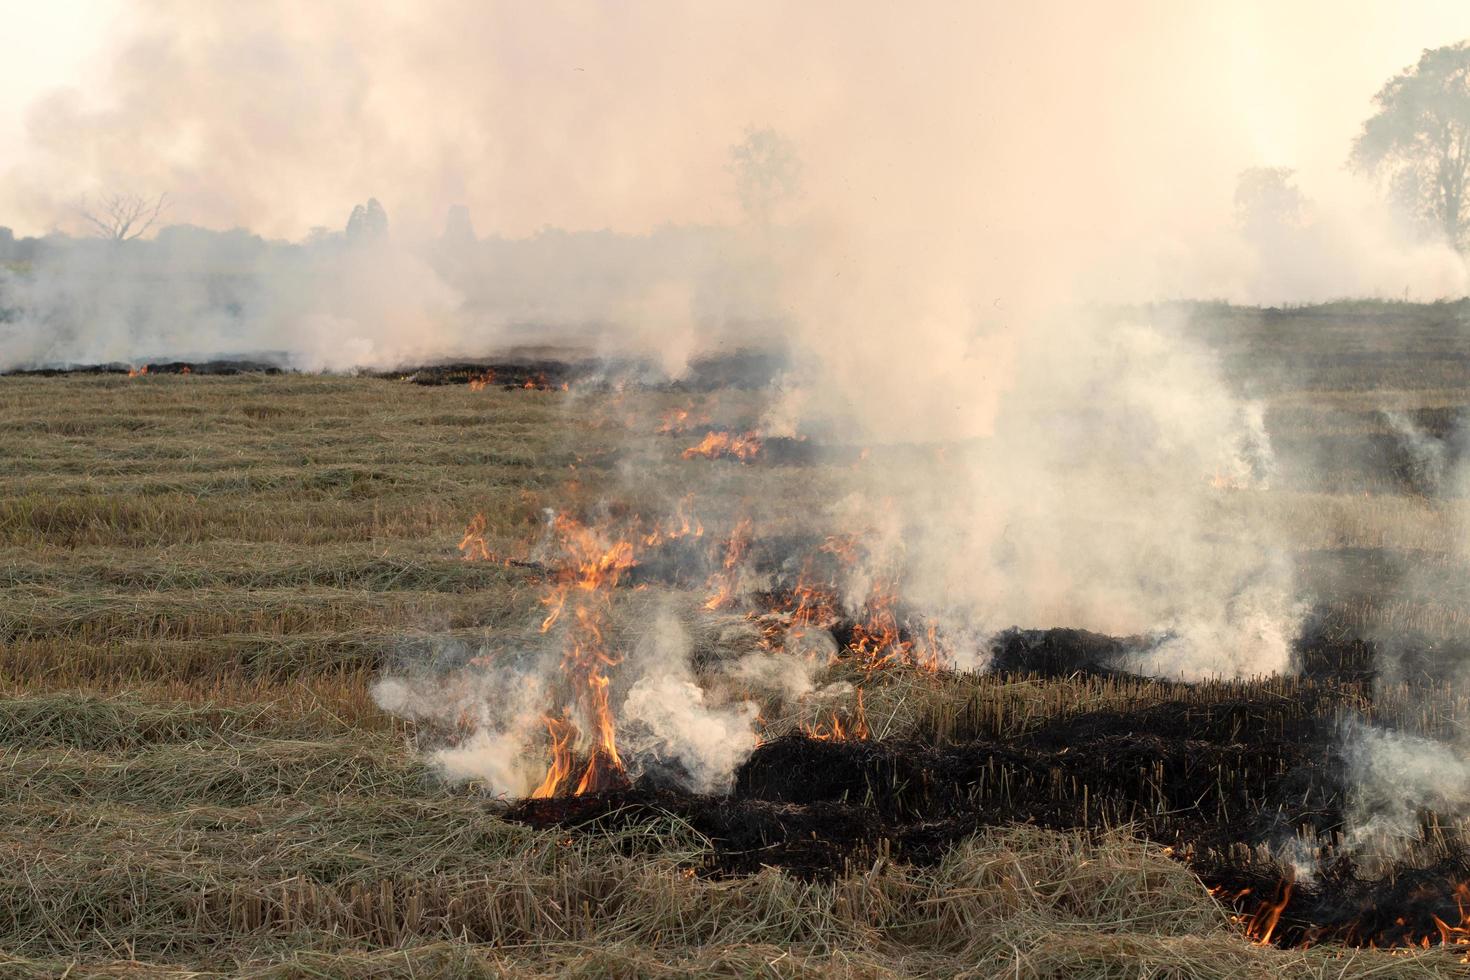 vista de la quema de paja de arroz en el campo de arroz rural. foto